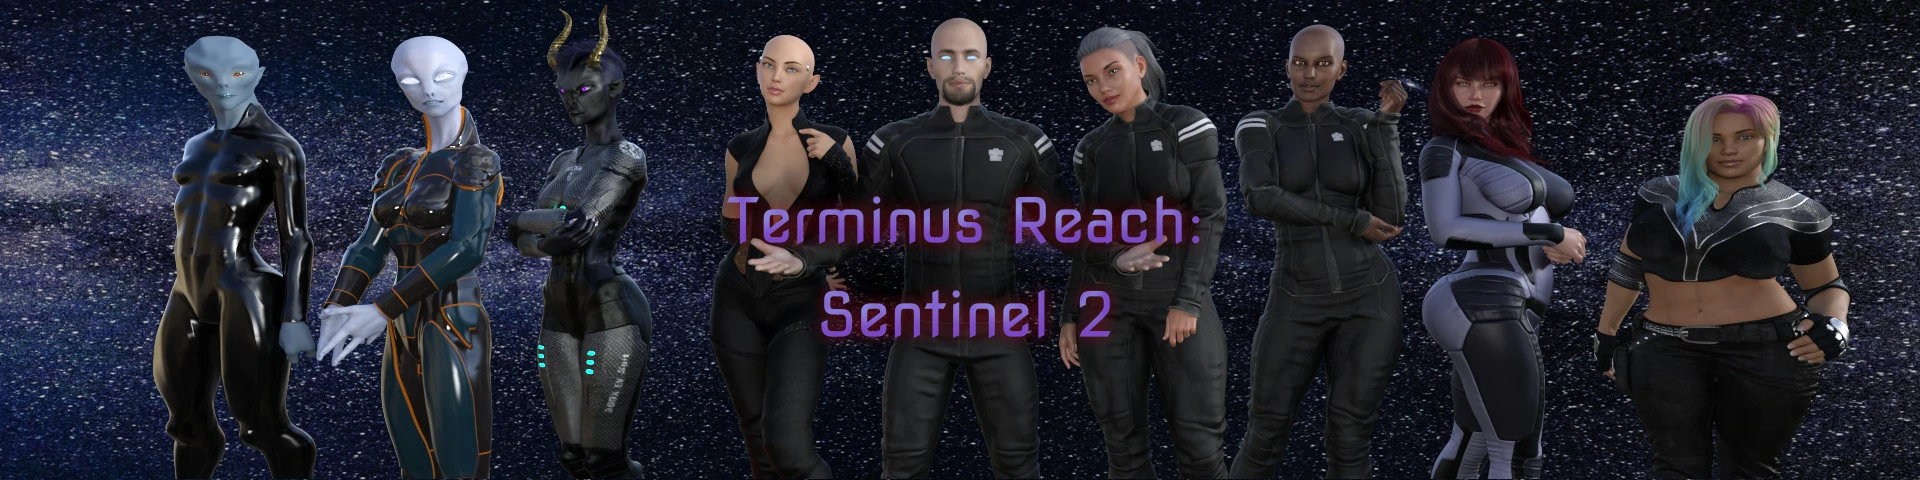 Terminus Reach: Sentinel 2 main image